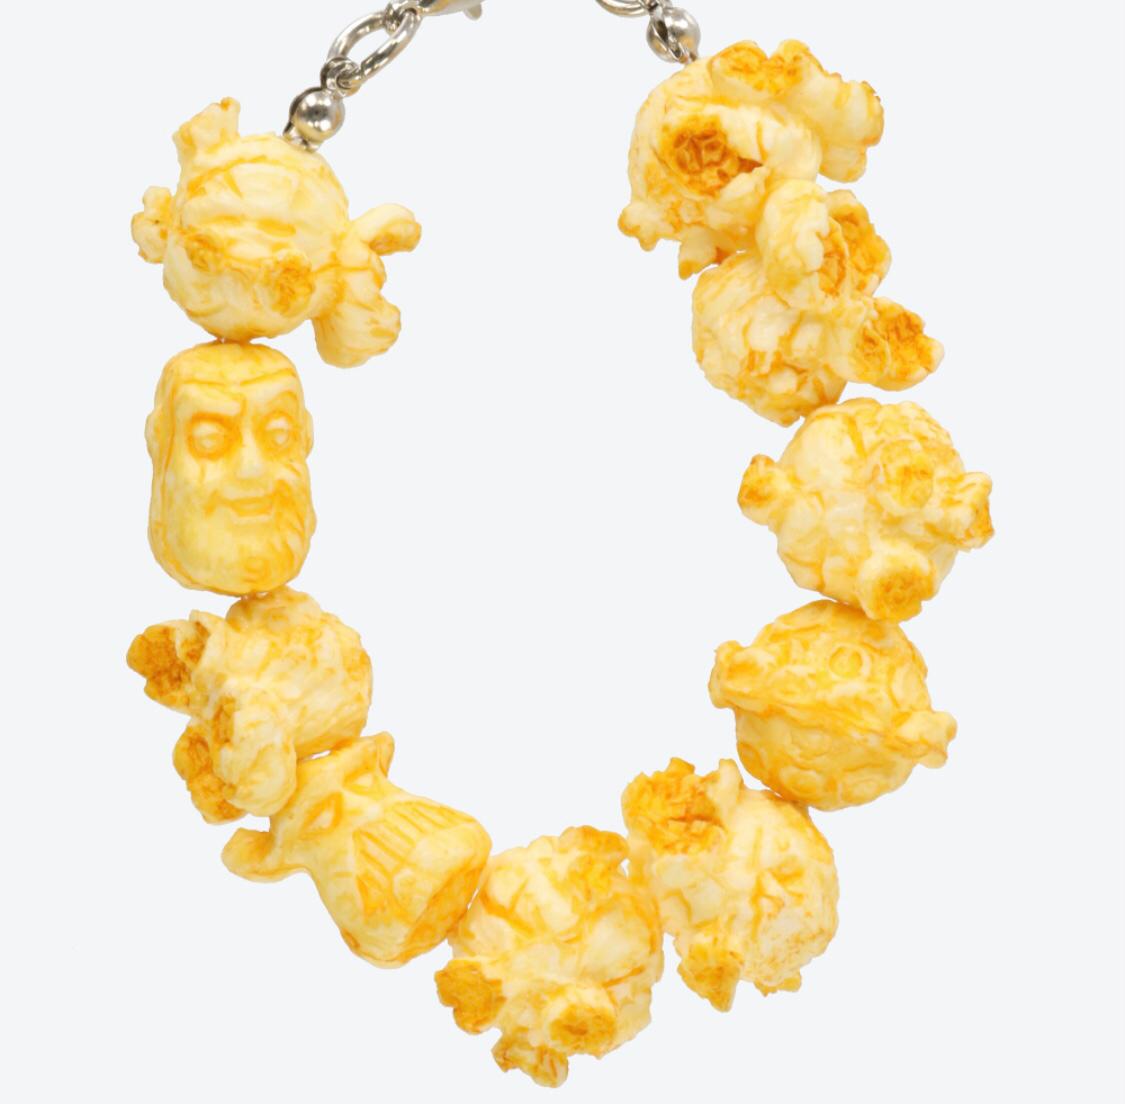 TRD - Keychain Collection - Buzz Lightyear Popcorn bucket